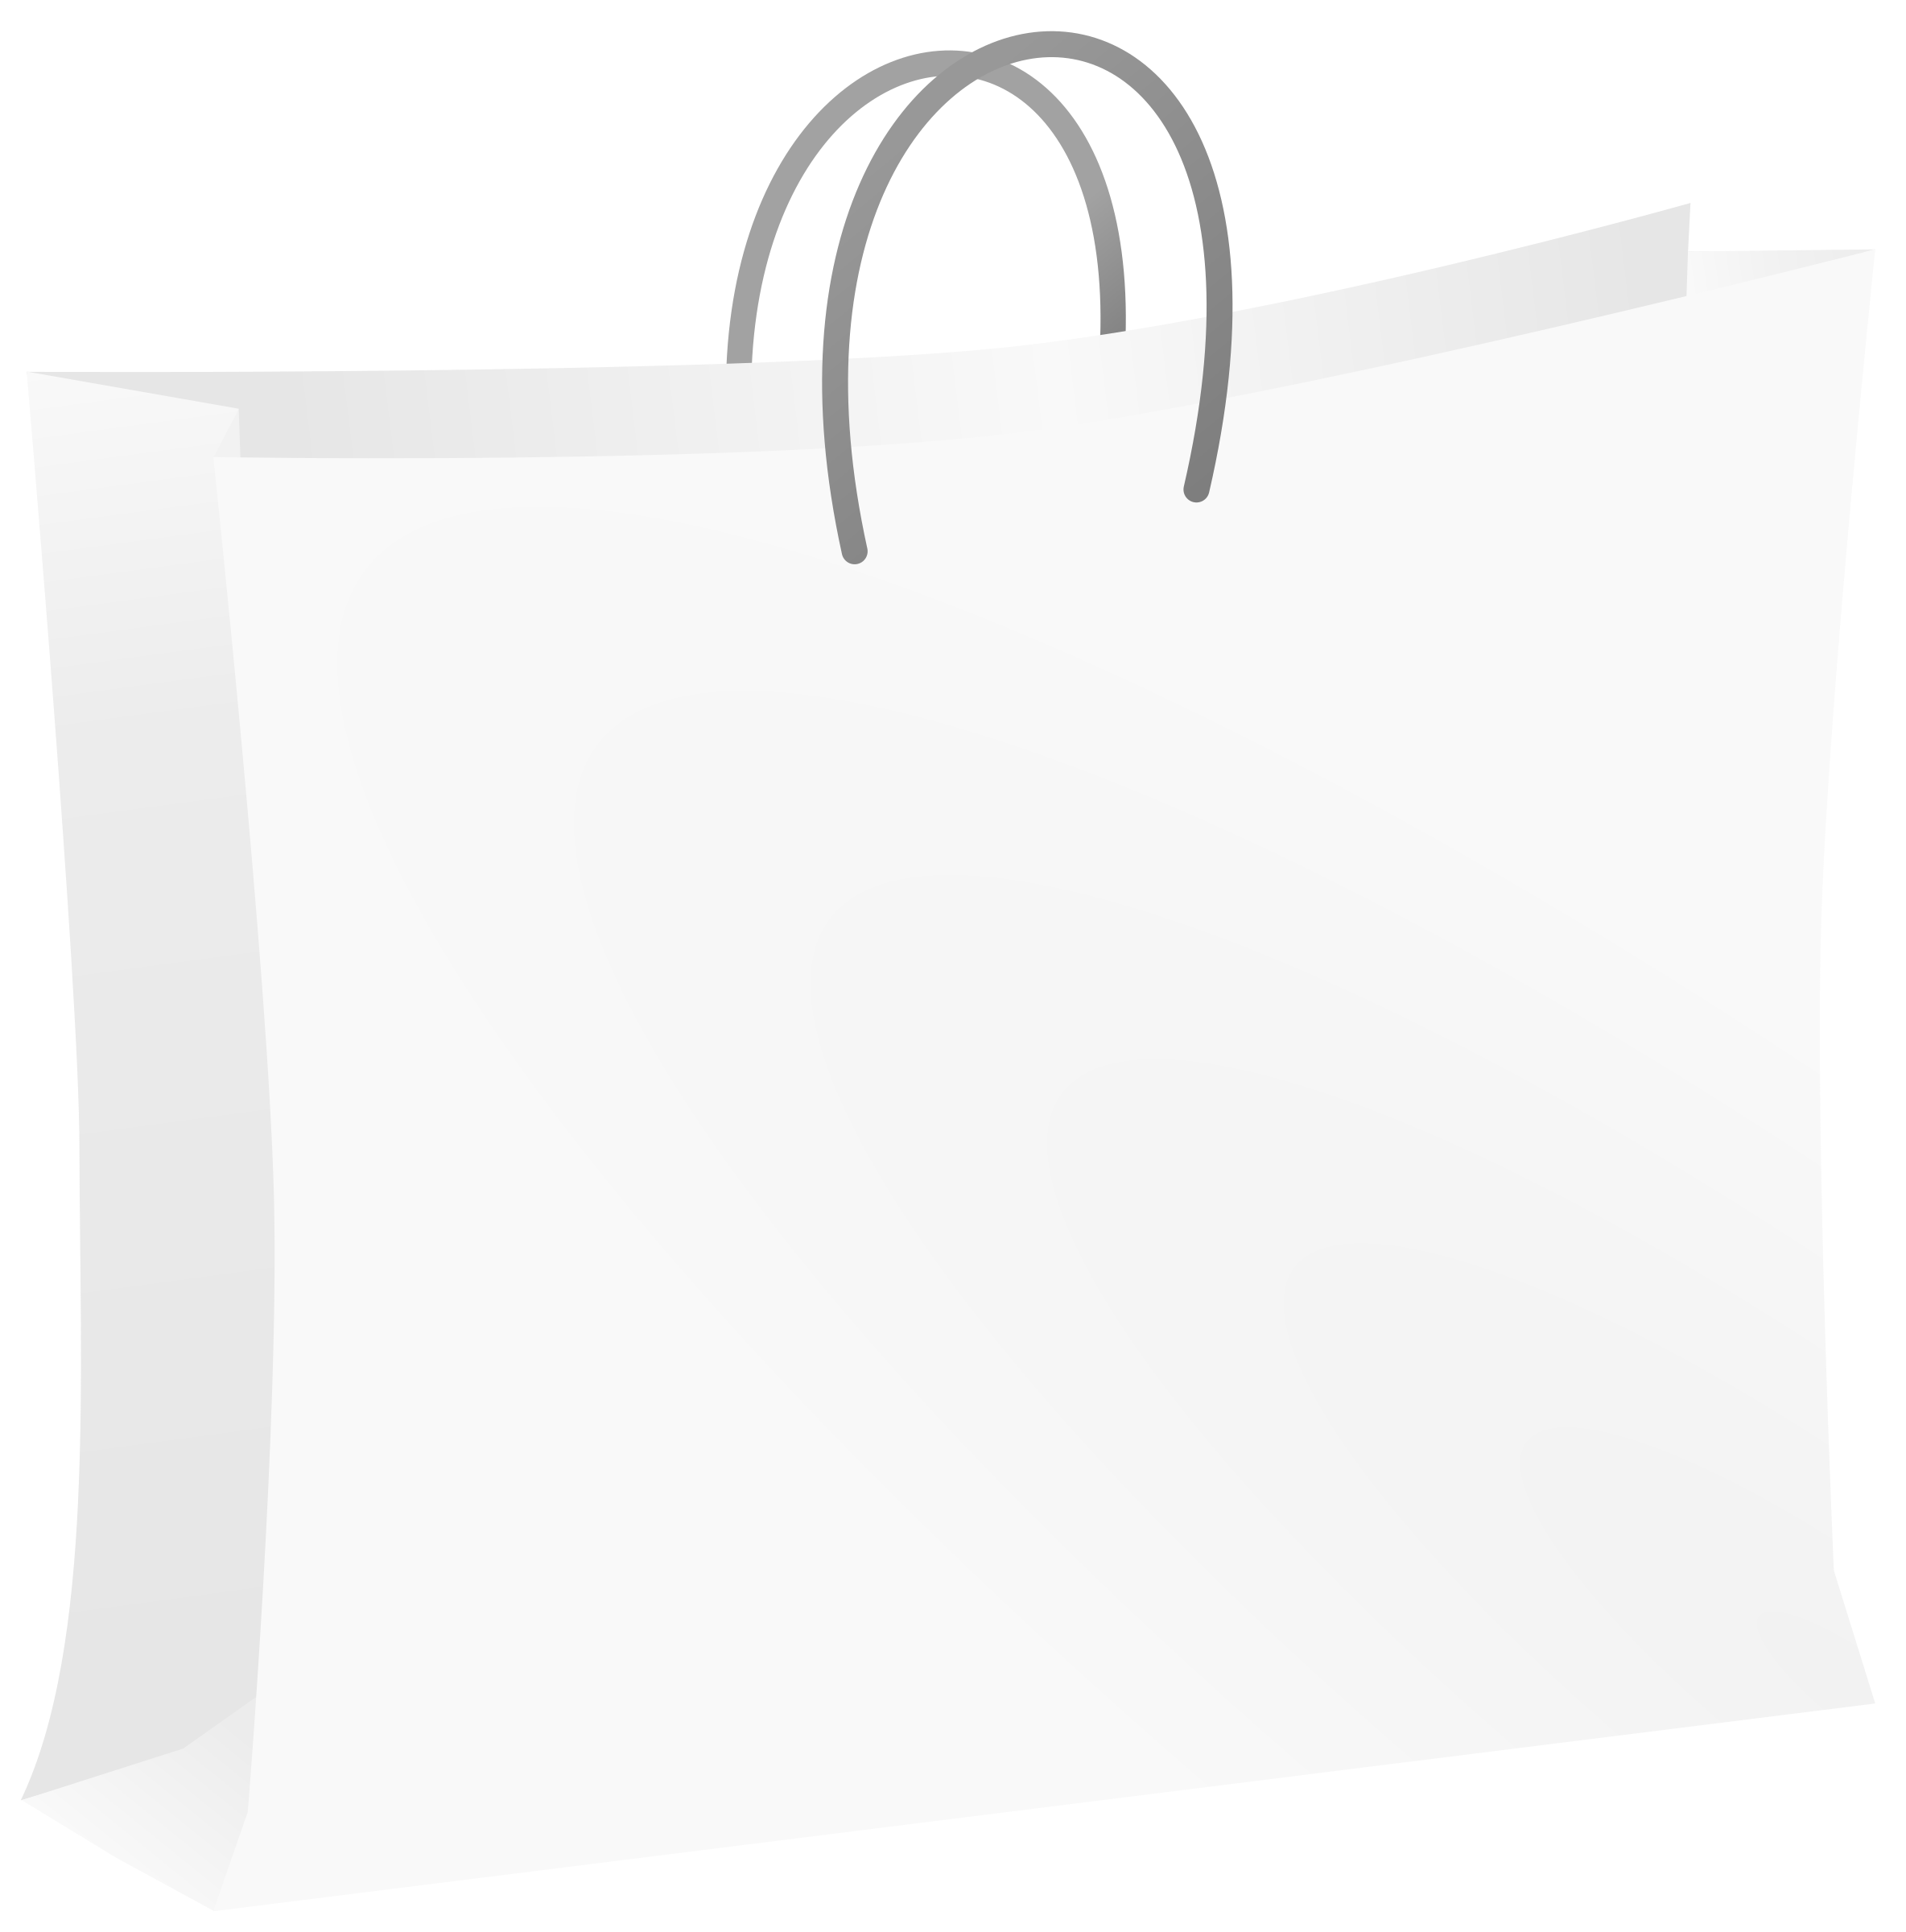 Words clipart shopping. White bag